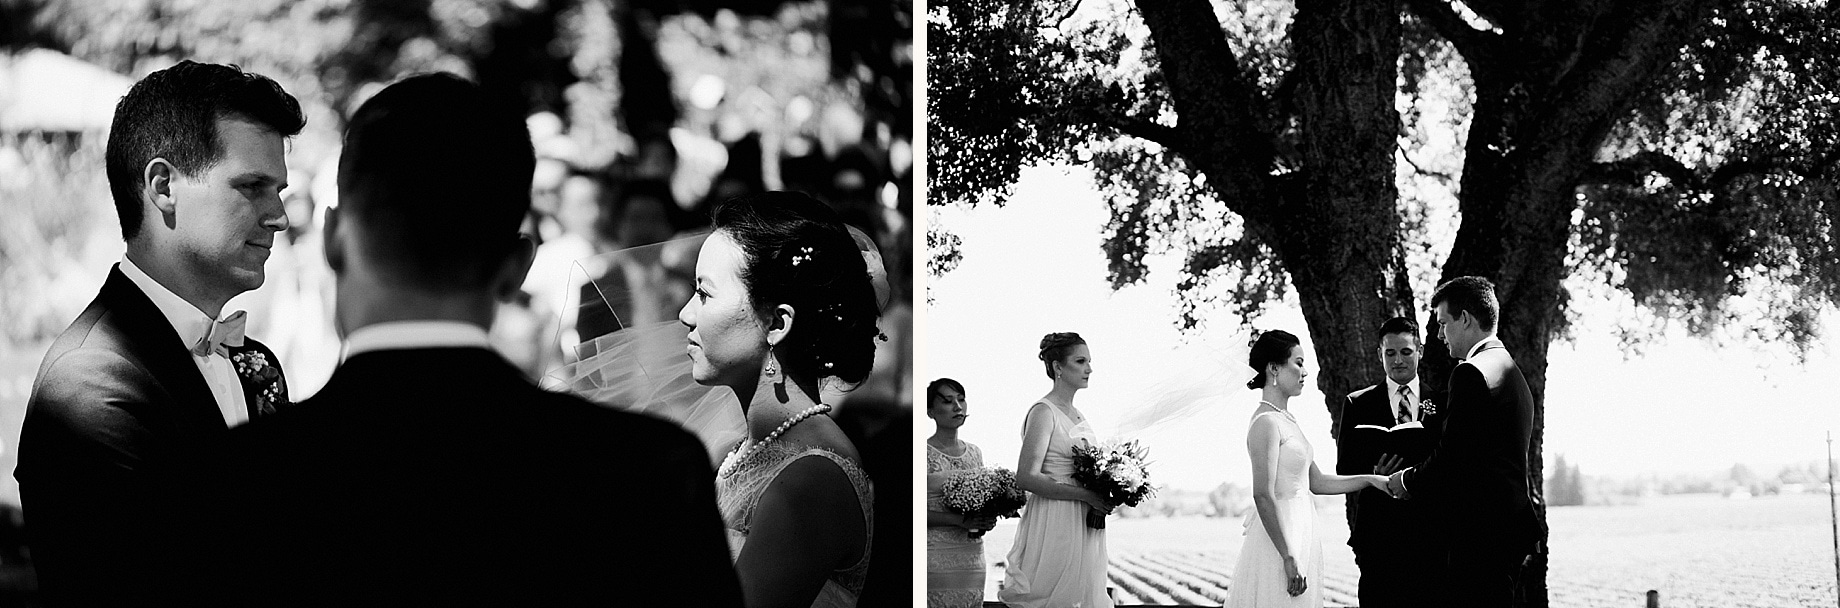 black and white wedding ceremony